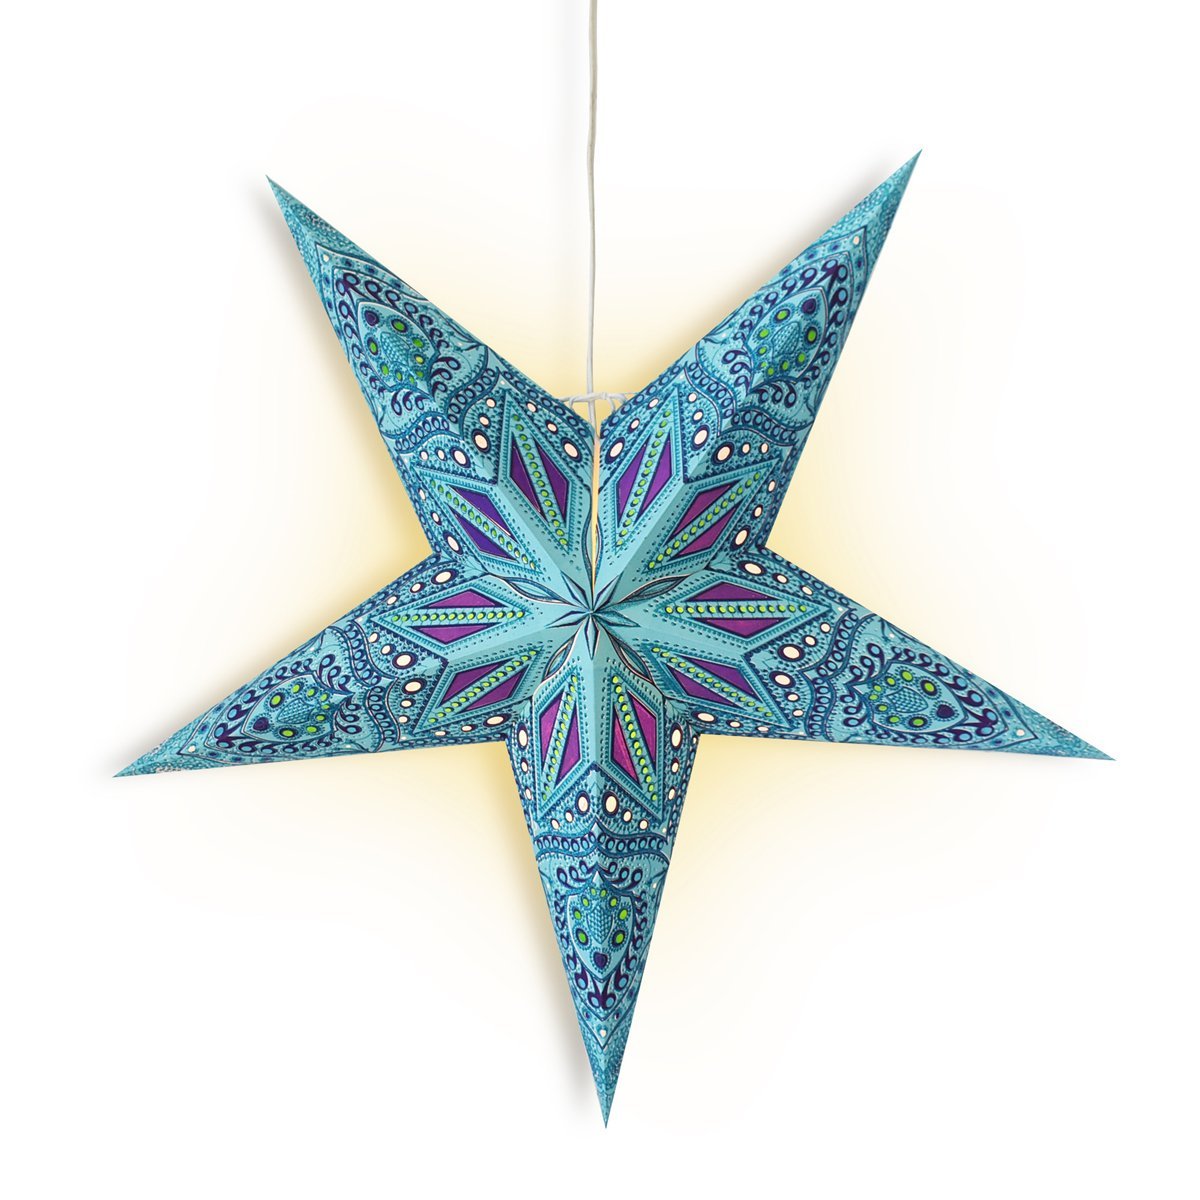 24" Turquoise Crystal Glitter Paper Star Lantern, Hanging Wedding & Party Decoration - PaperLanternStore.com - Paper Lanterns, Decor, Party Lights & More